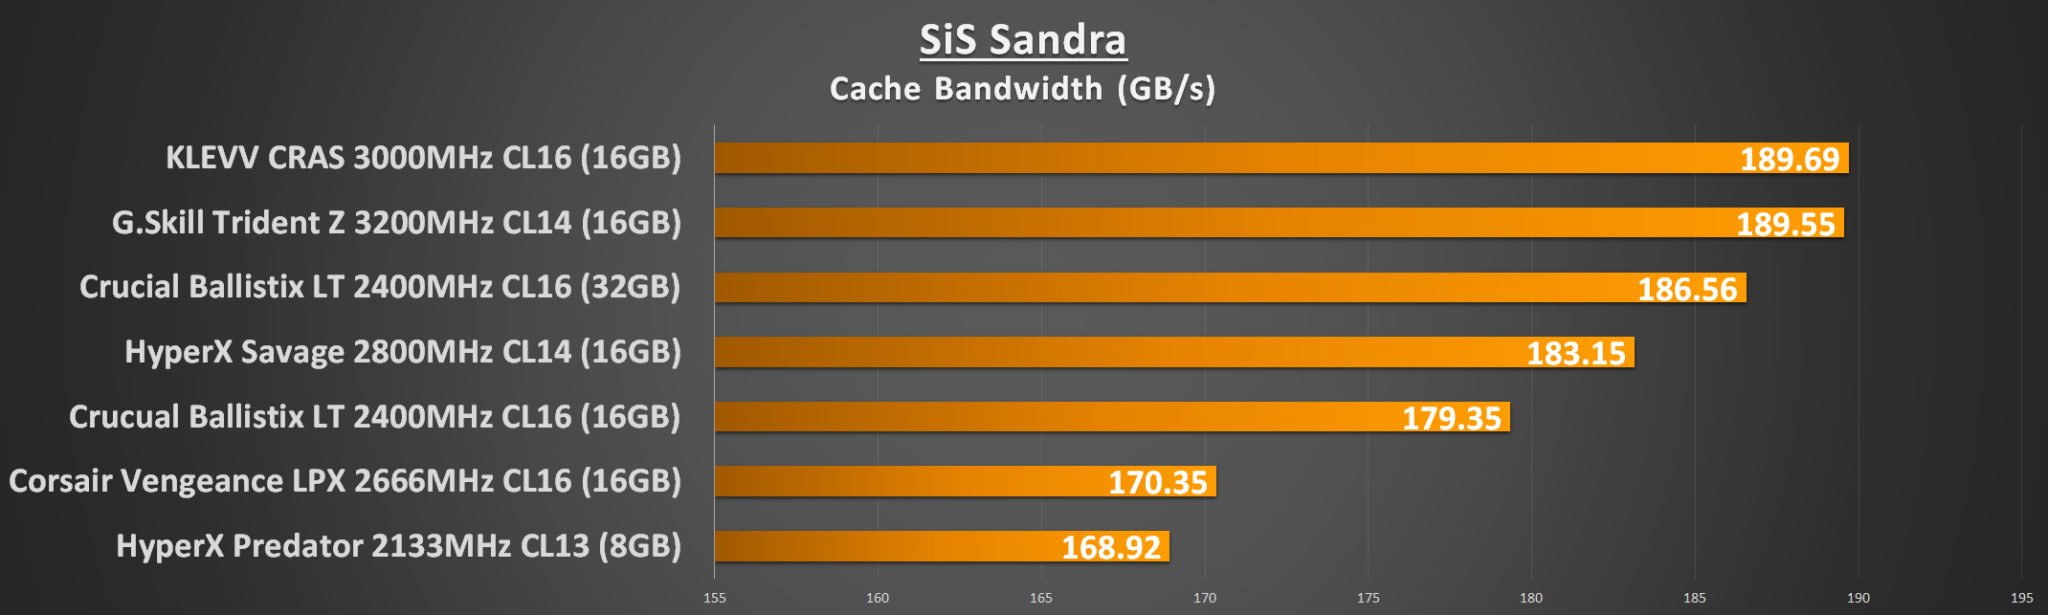 SiS Sandra Cache Bandwidth